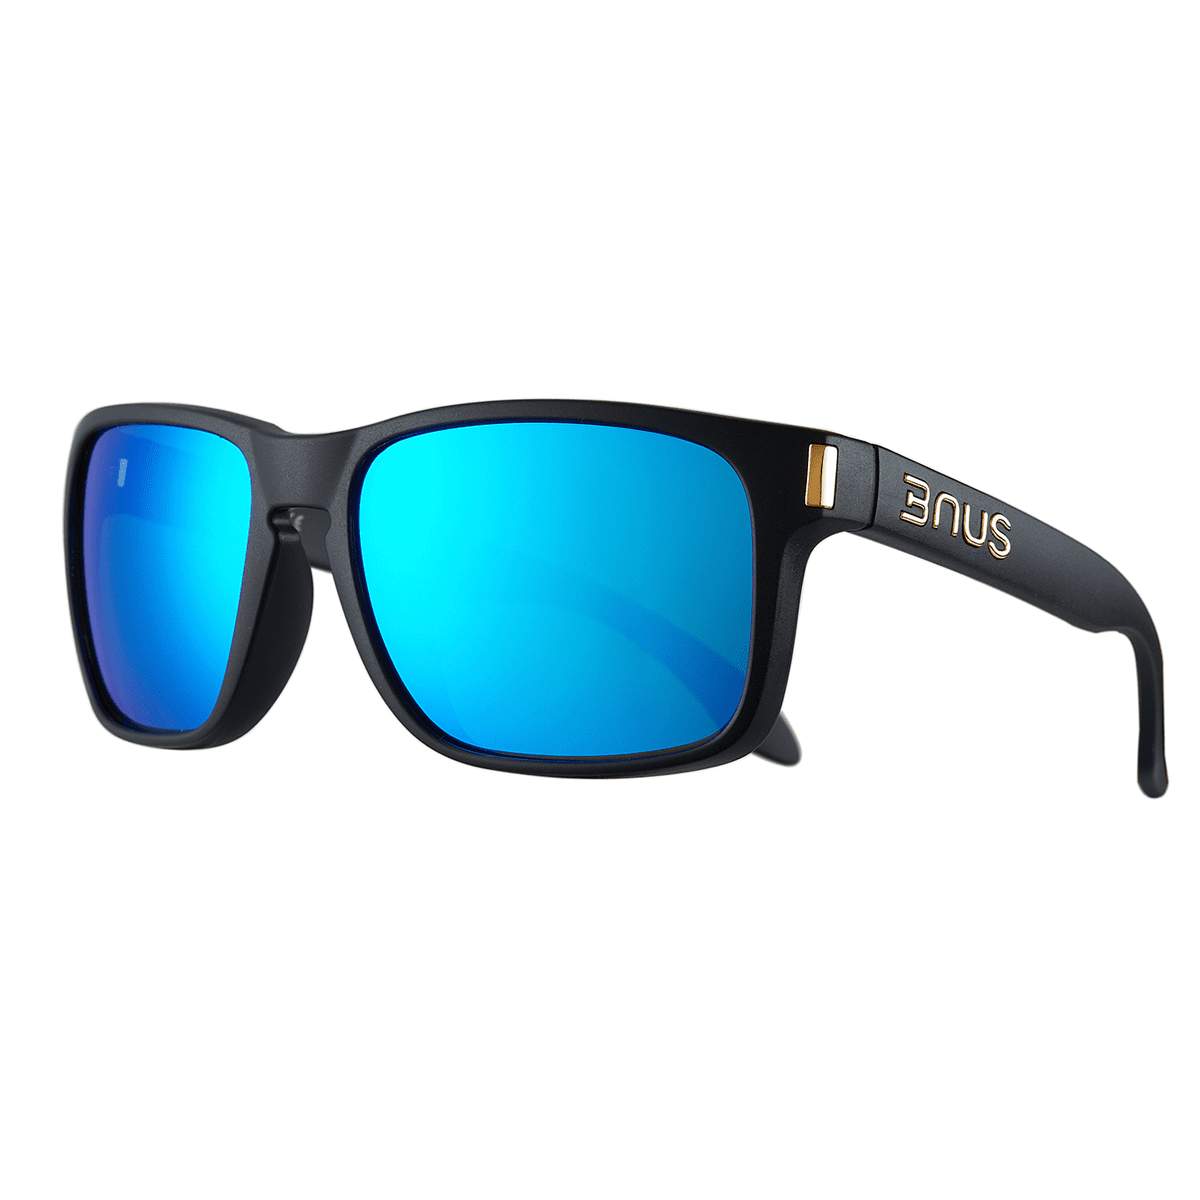 B.N.U.S Polarized Sunglasses for Women Men Corning Real Glass